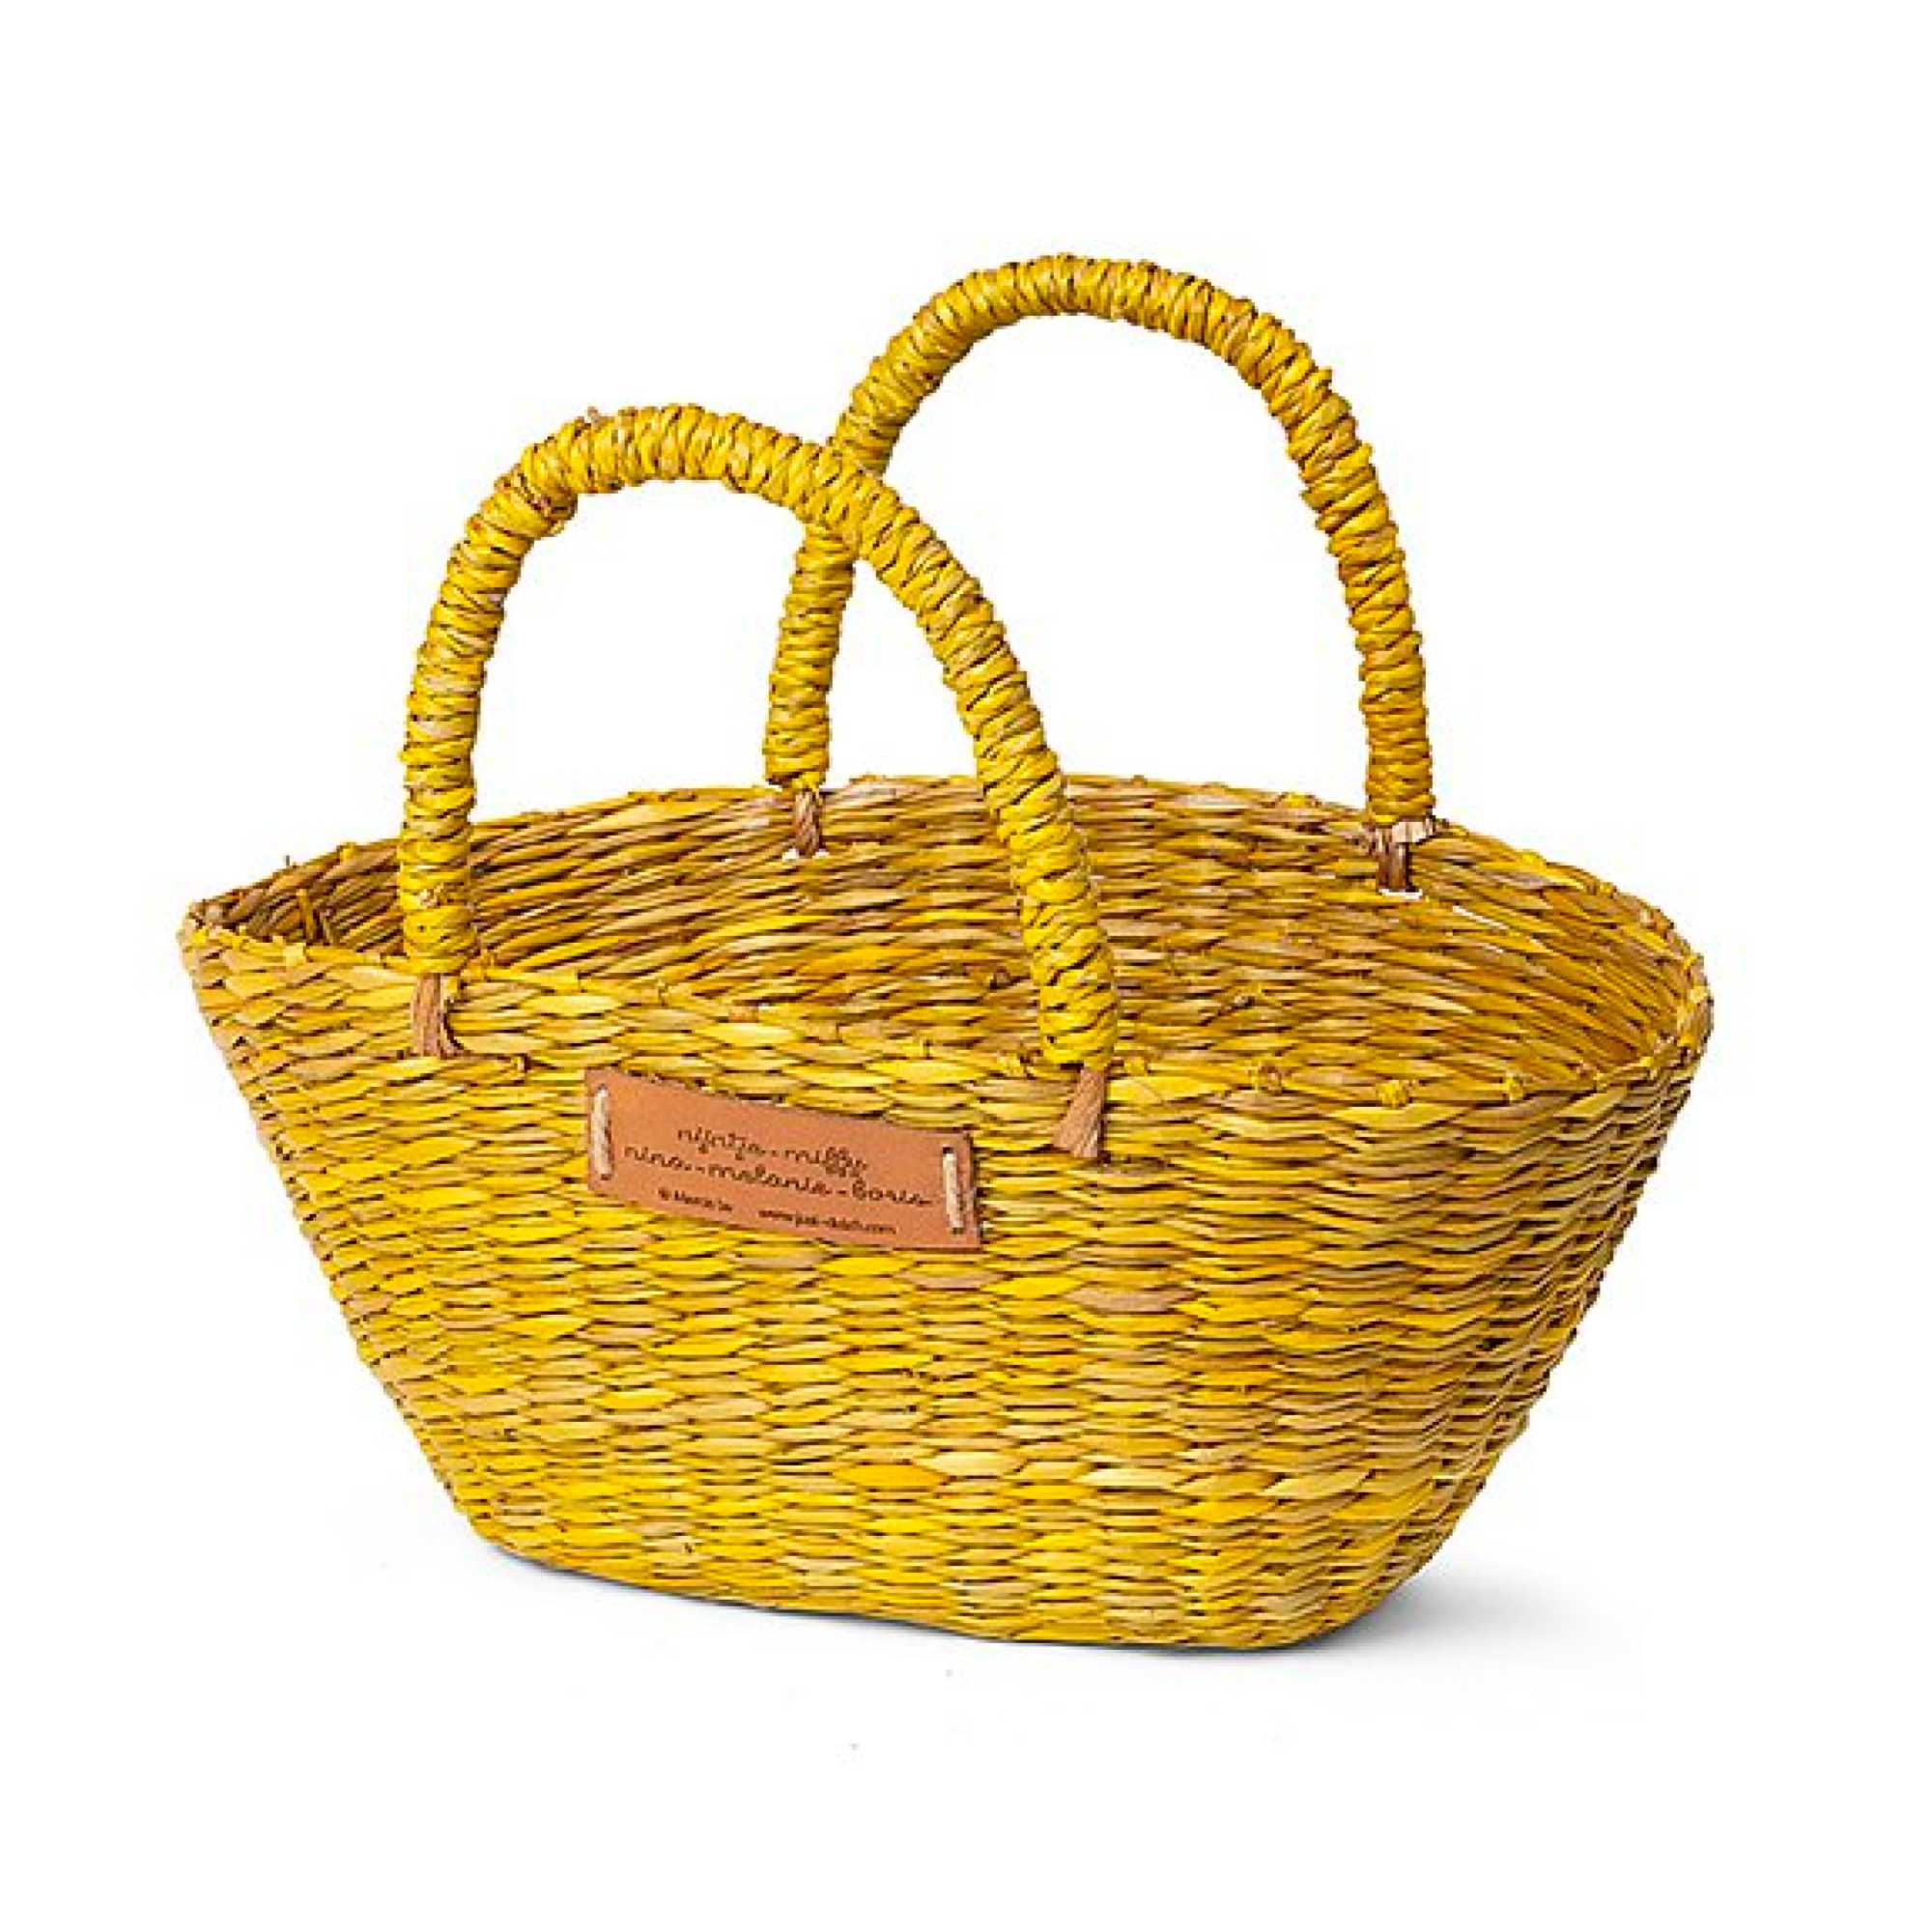 Just Dutch Handmade Basket For Miffy Dolls, Yellow